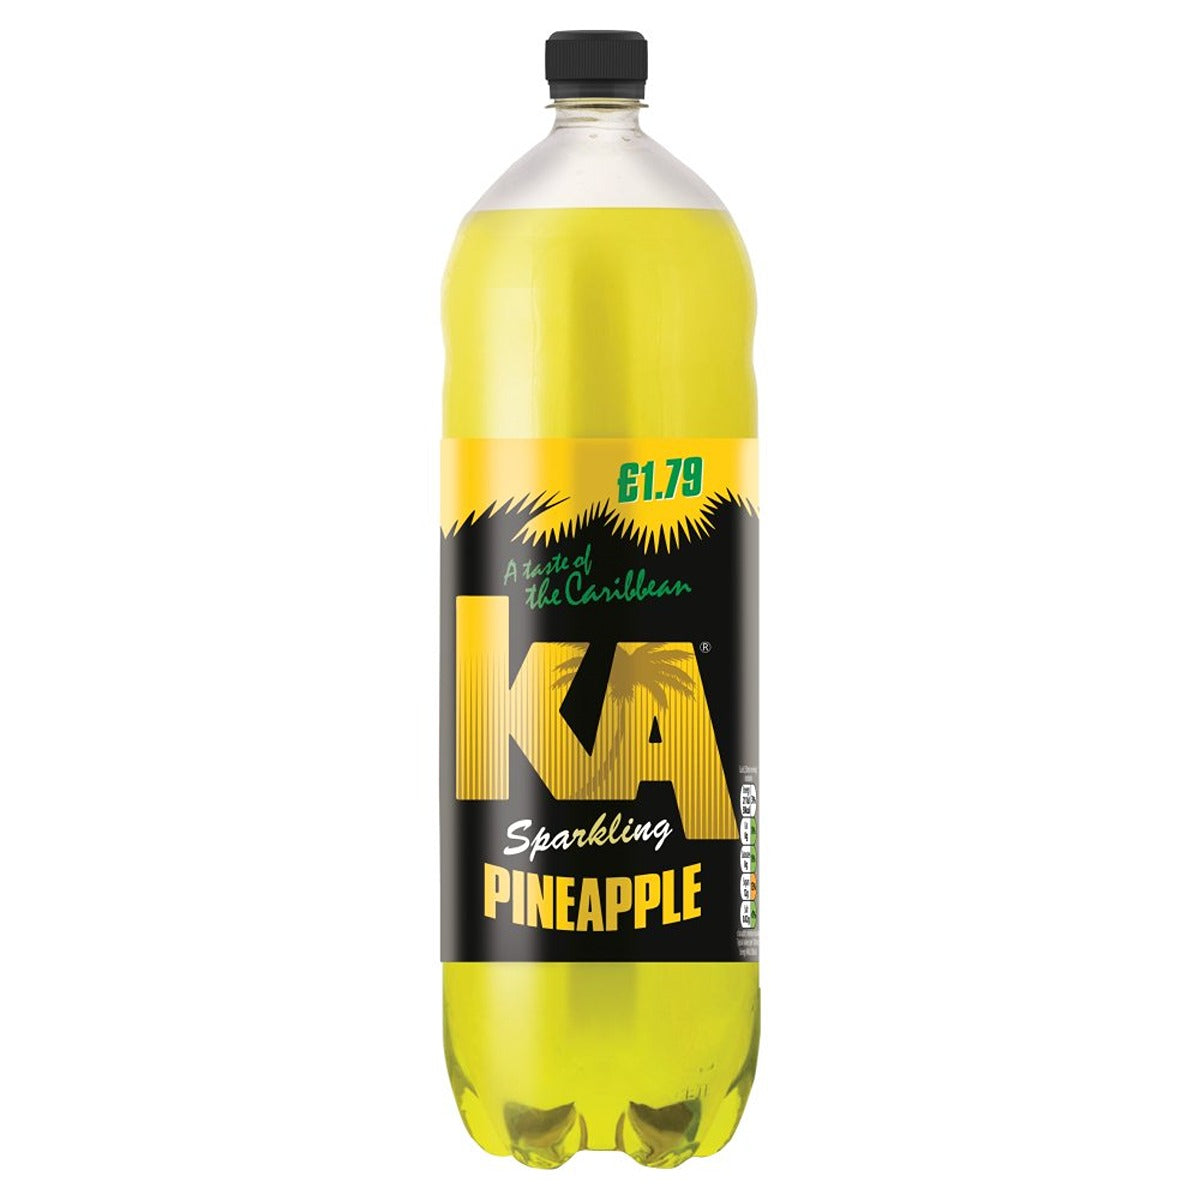 A bottle of KA - Sparkling Pineapple - 2L by KA on a white background.